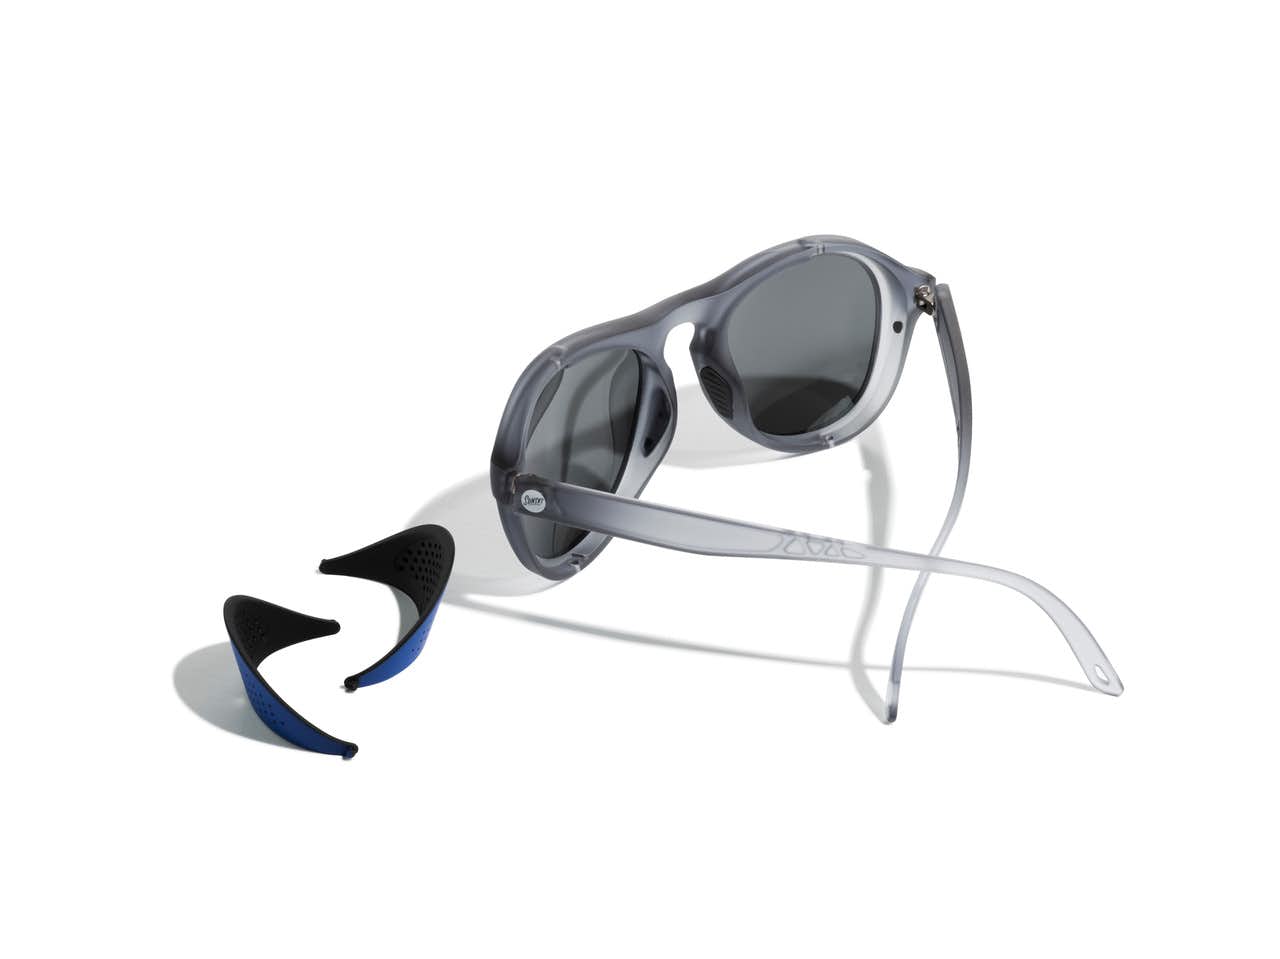 Treeline Sunglasses Navy Silver